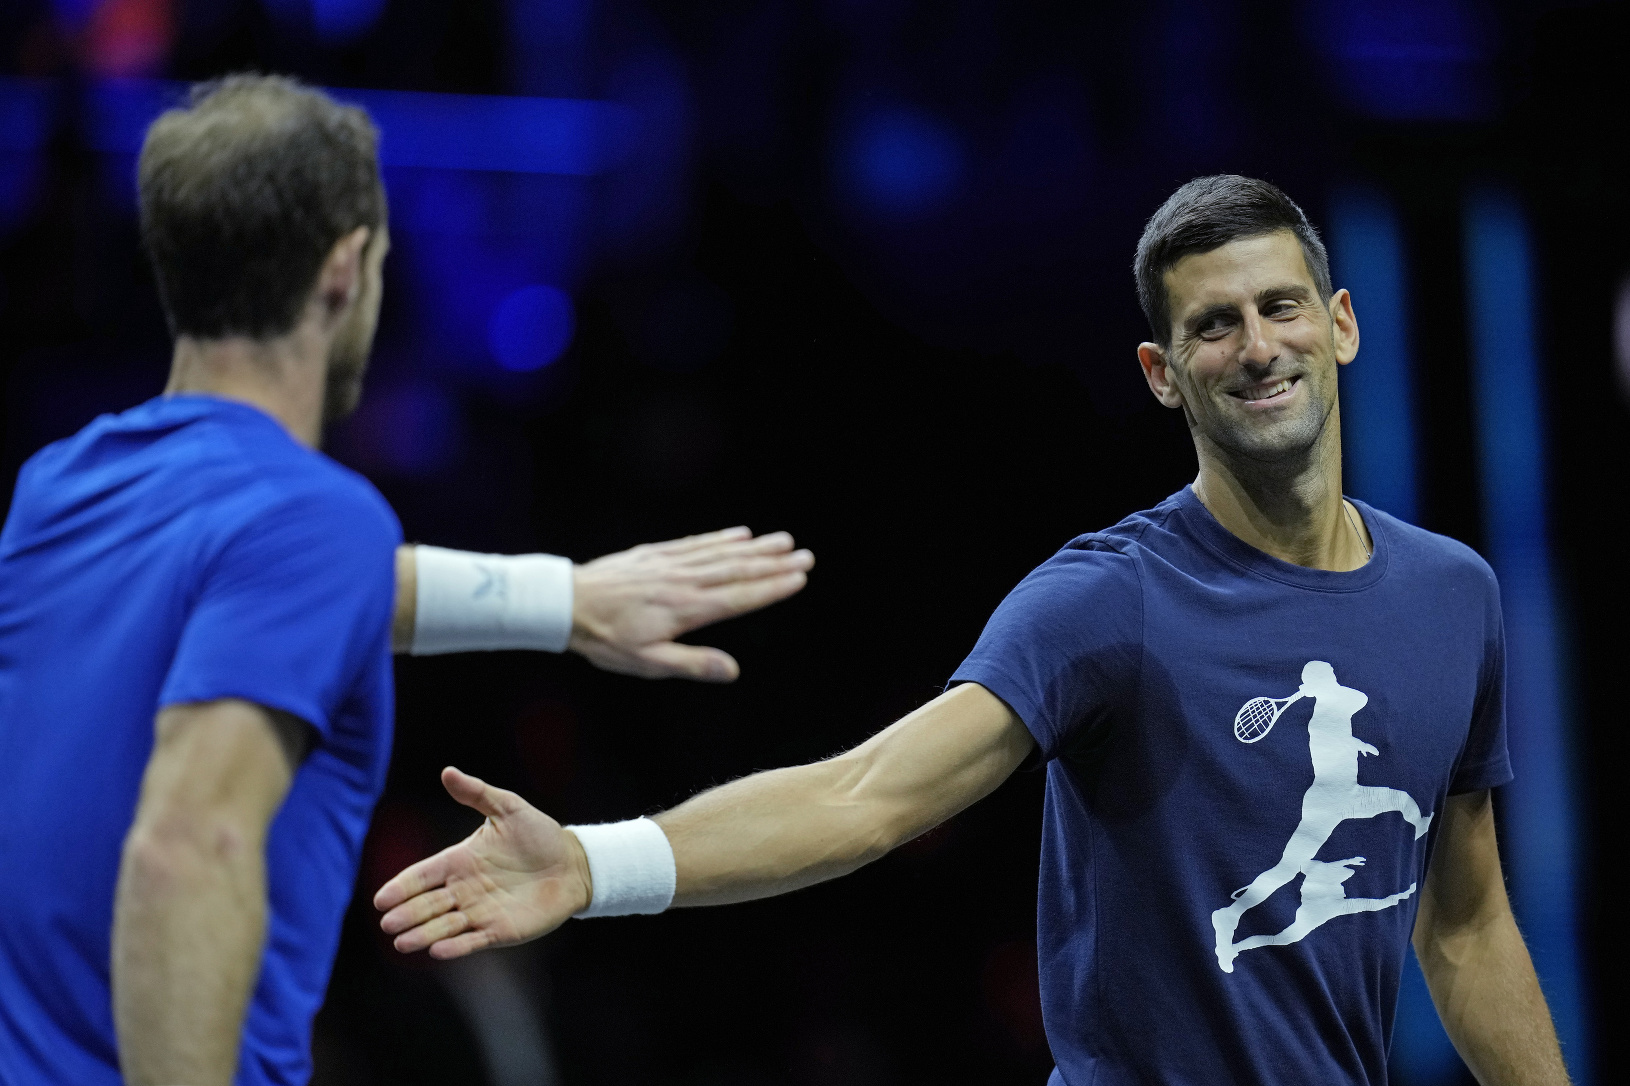 Andy Murray a Novak